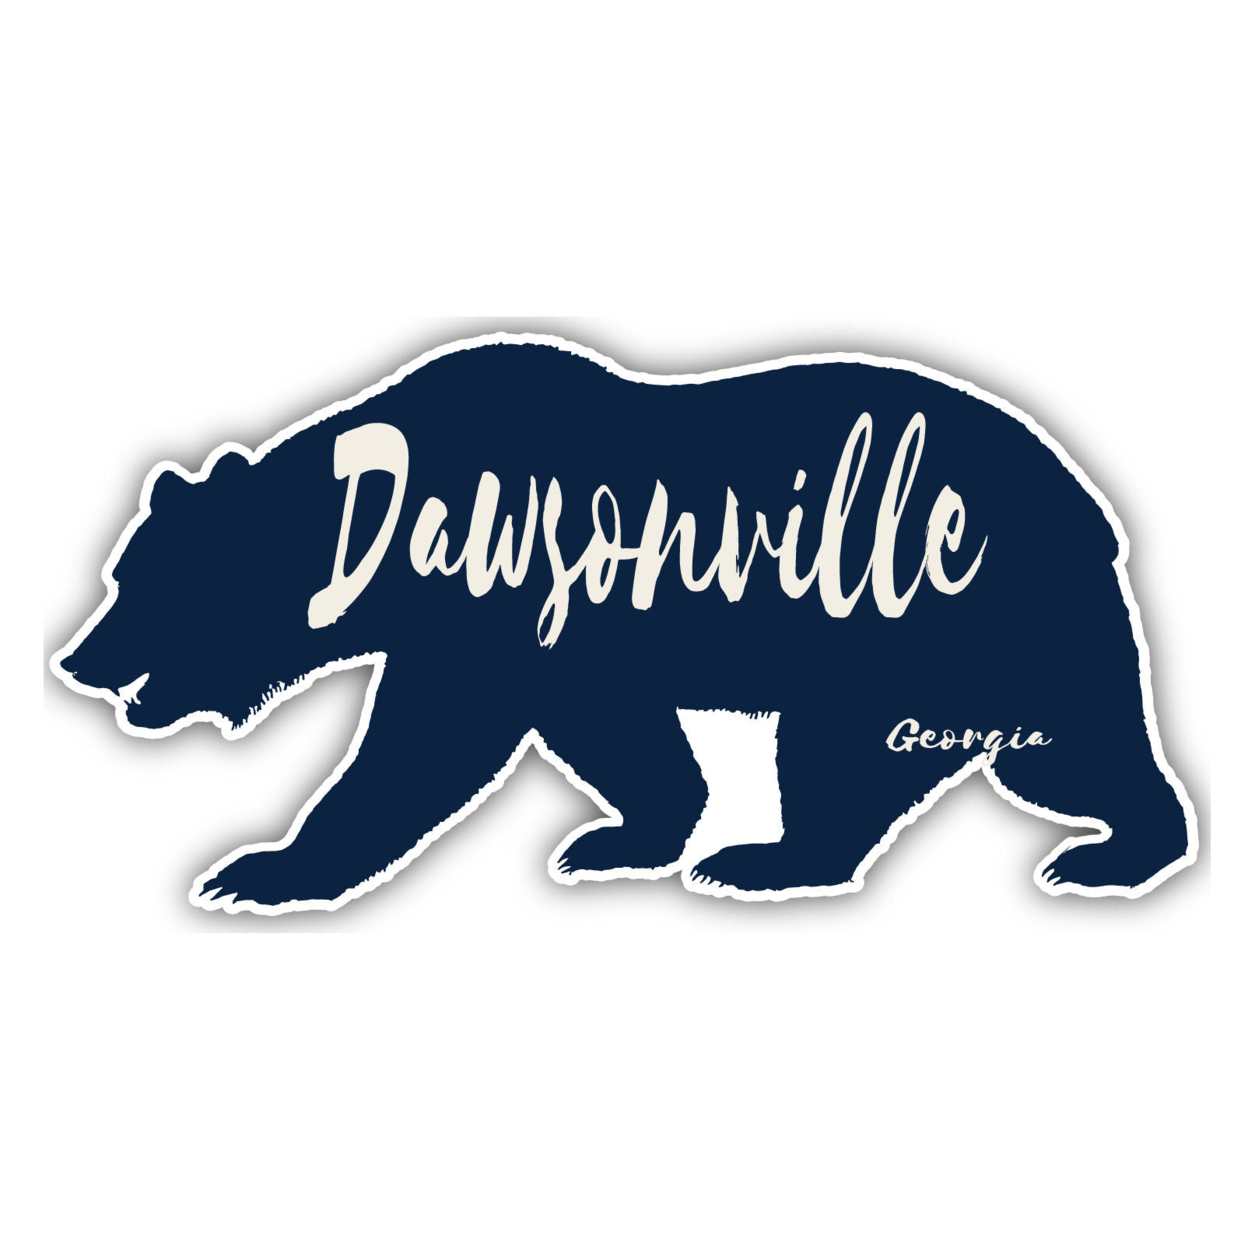 Dawsonville Georgia Souvenir Decorative Stickers (Choose Theme And Size) - 4-Pack, 2-Inch, Bear